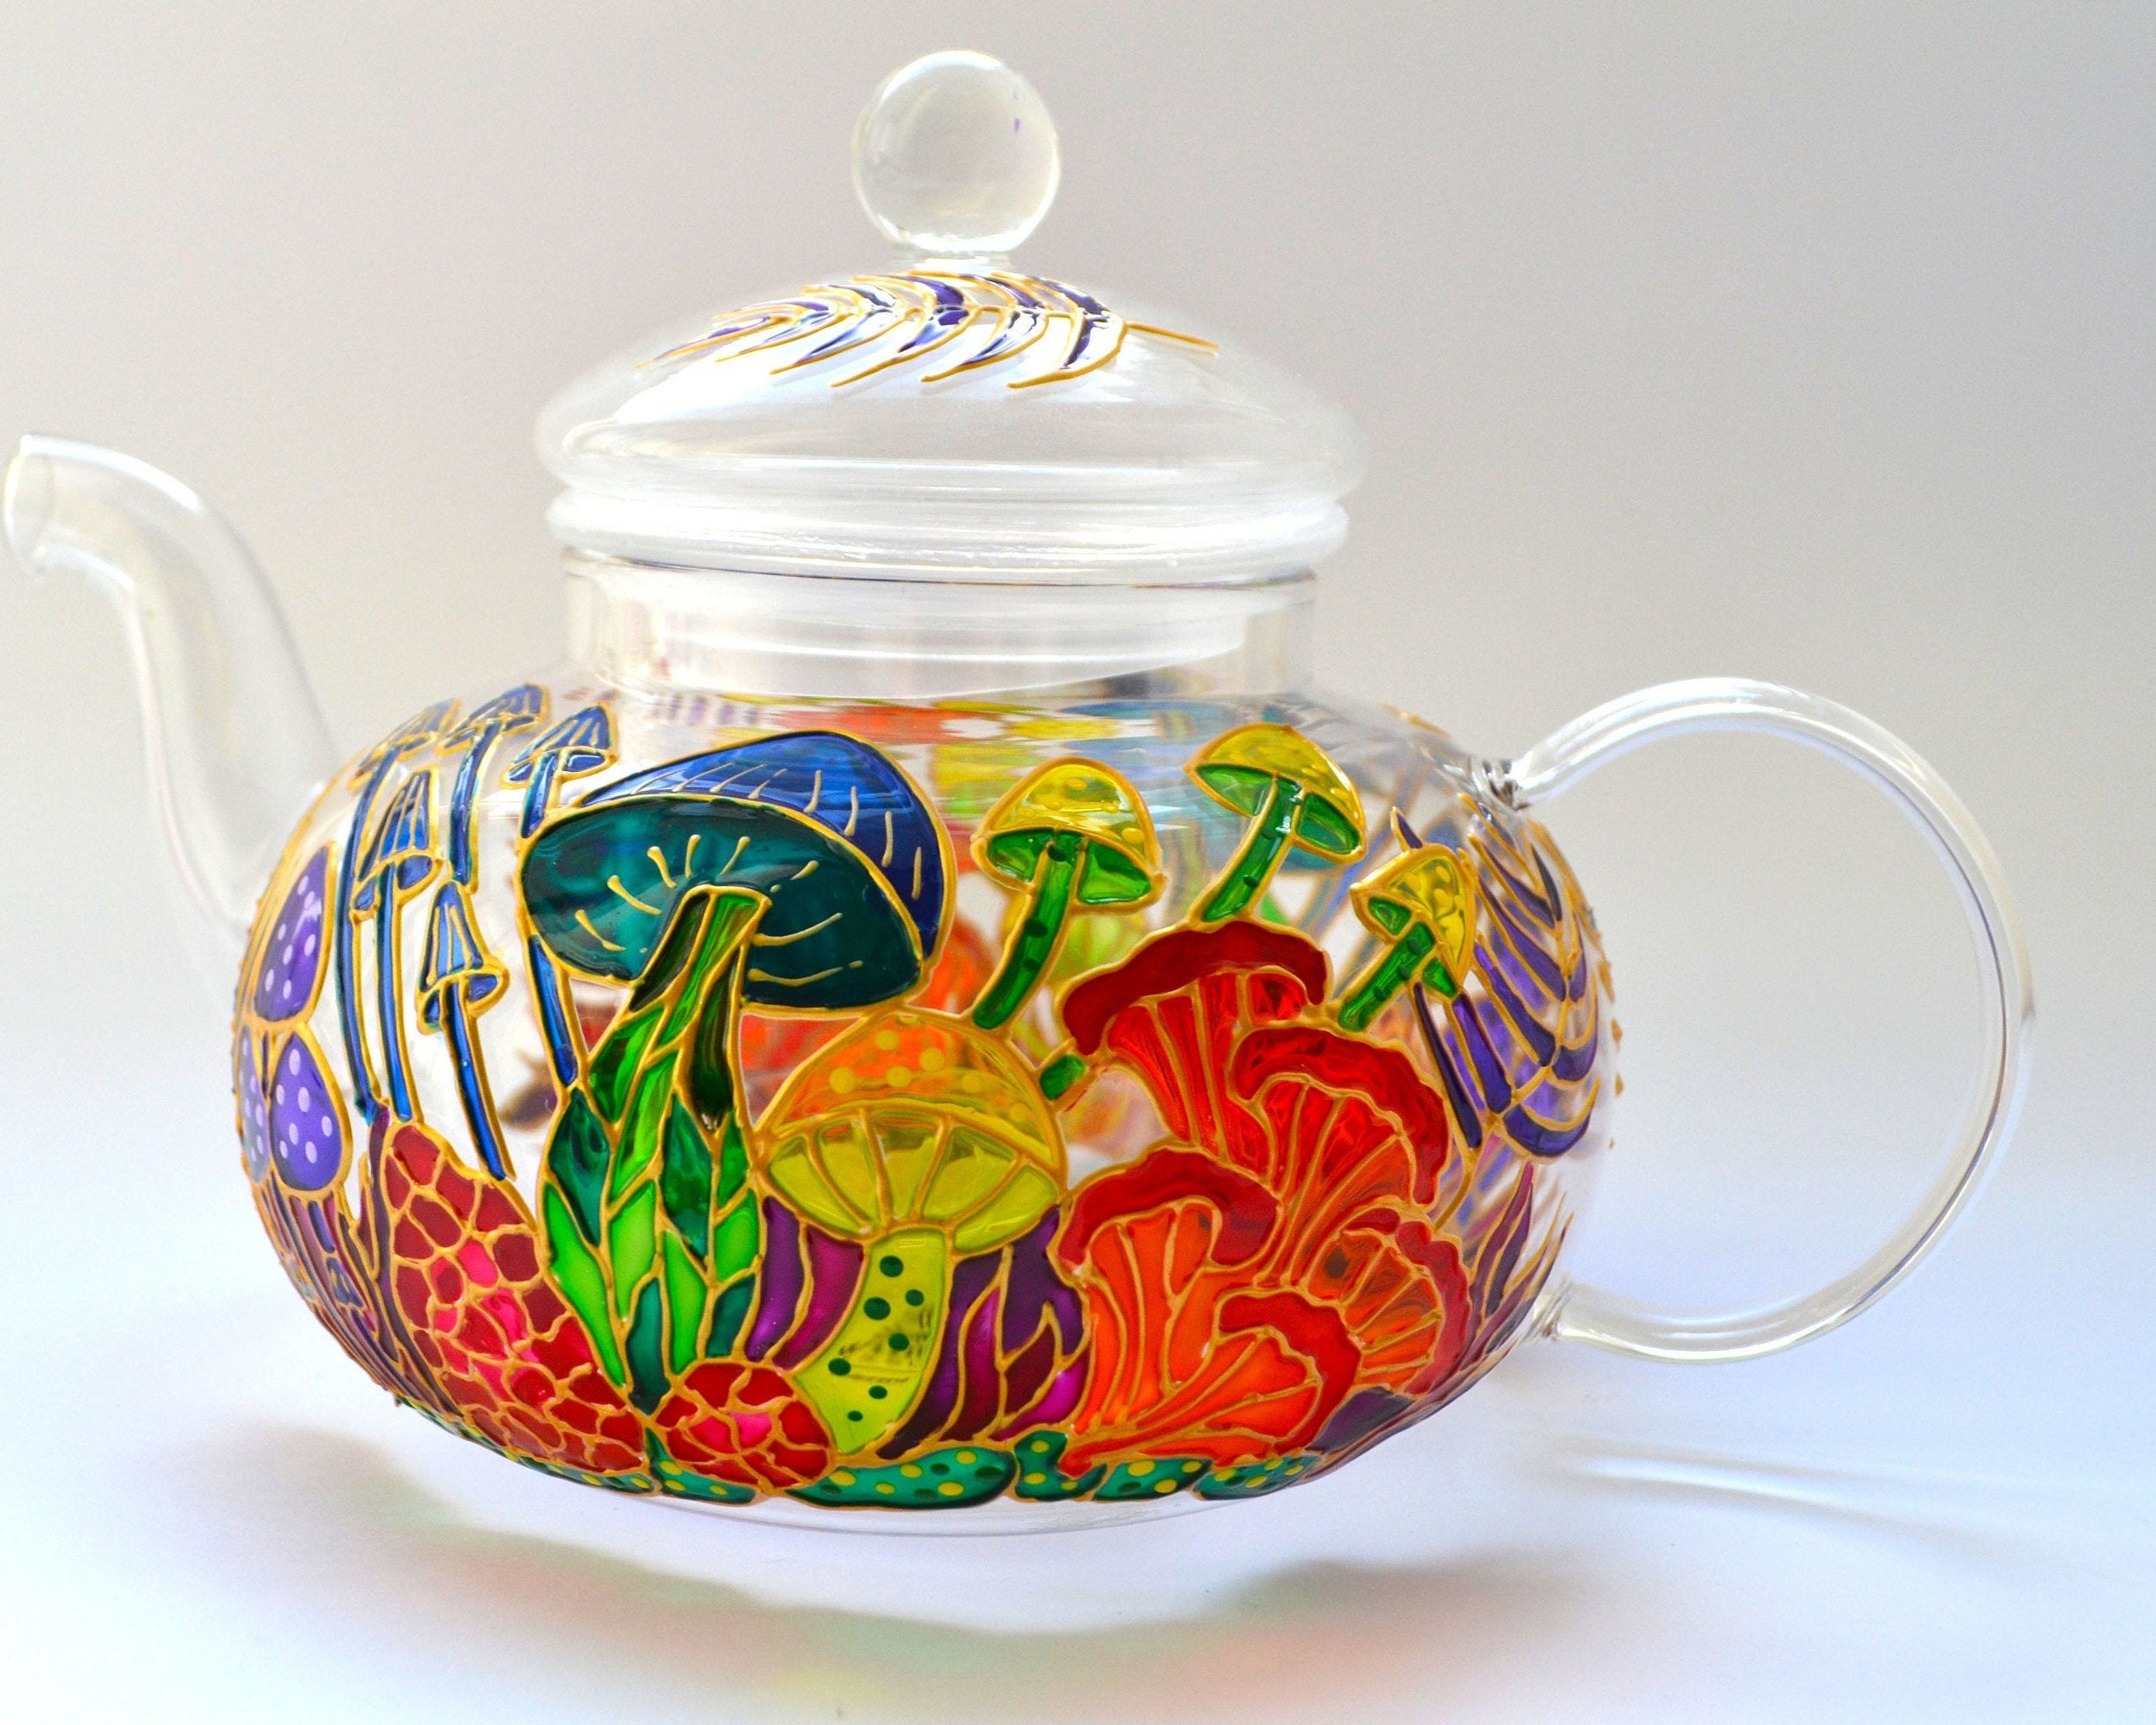 Personalized Personal Teapot by Alessi Single Serve Tea Pot Delta